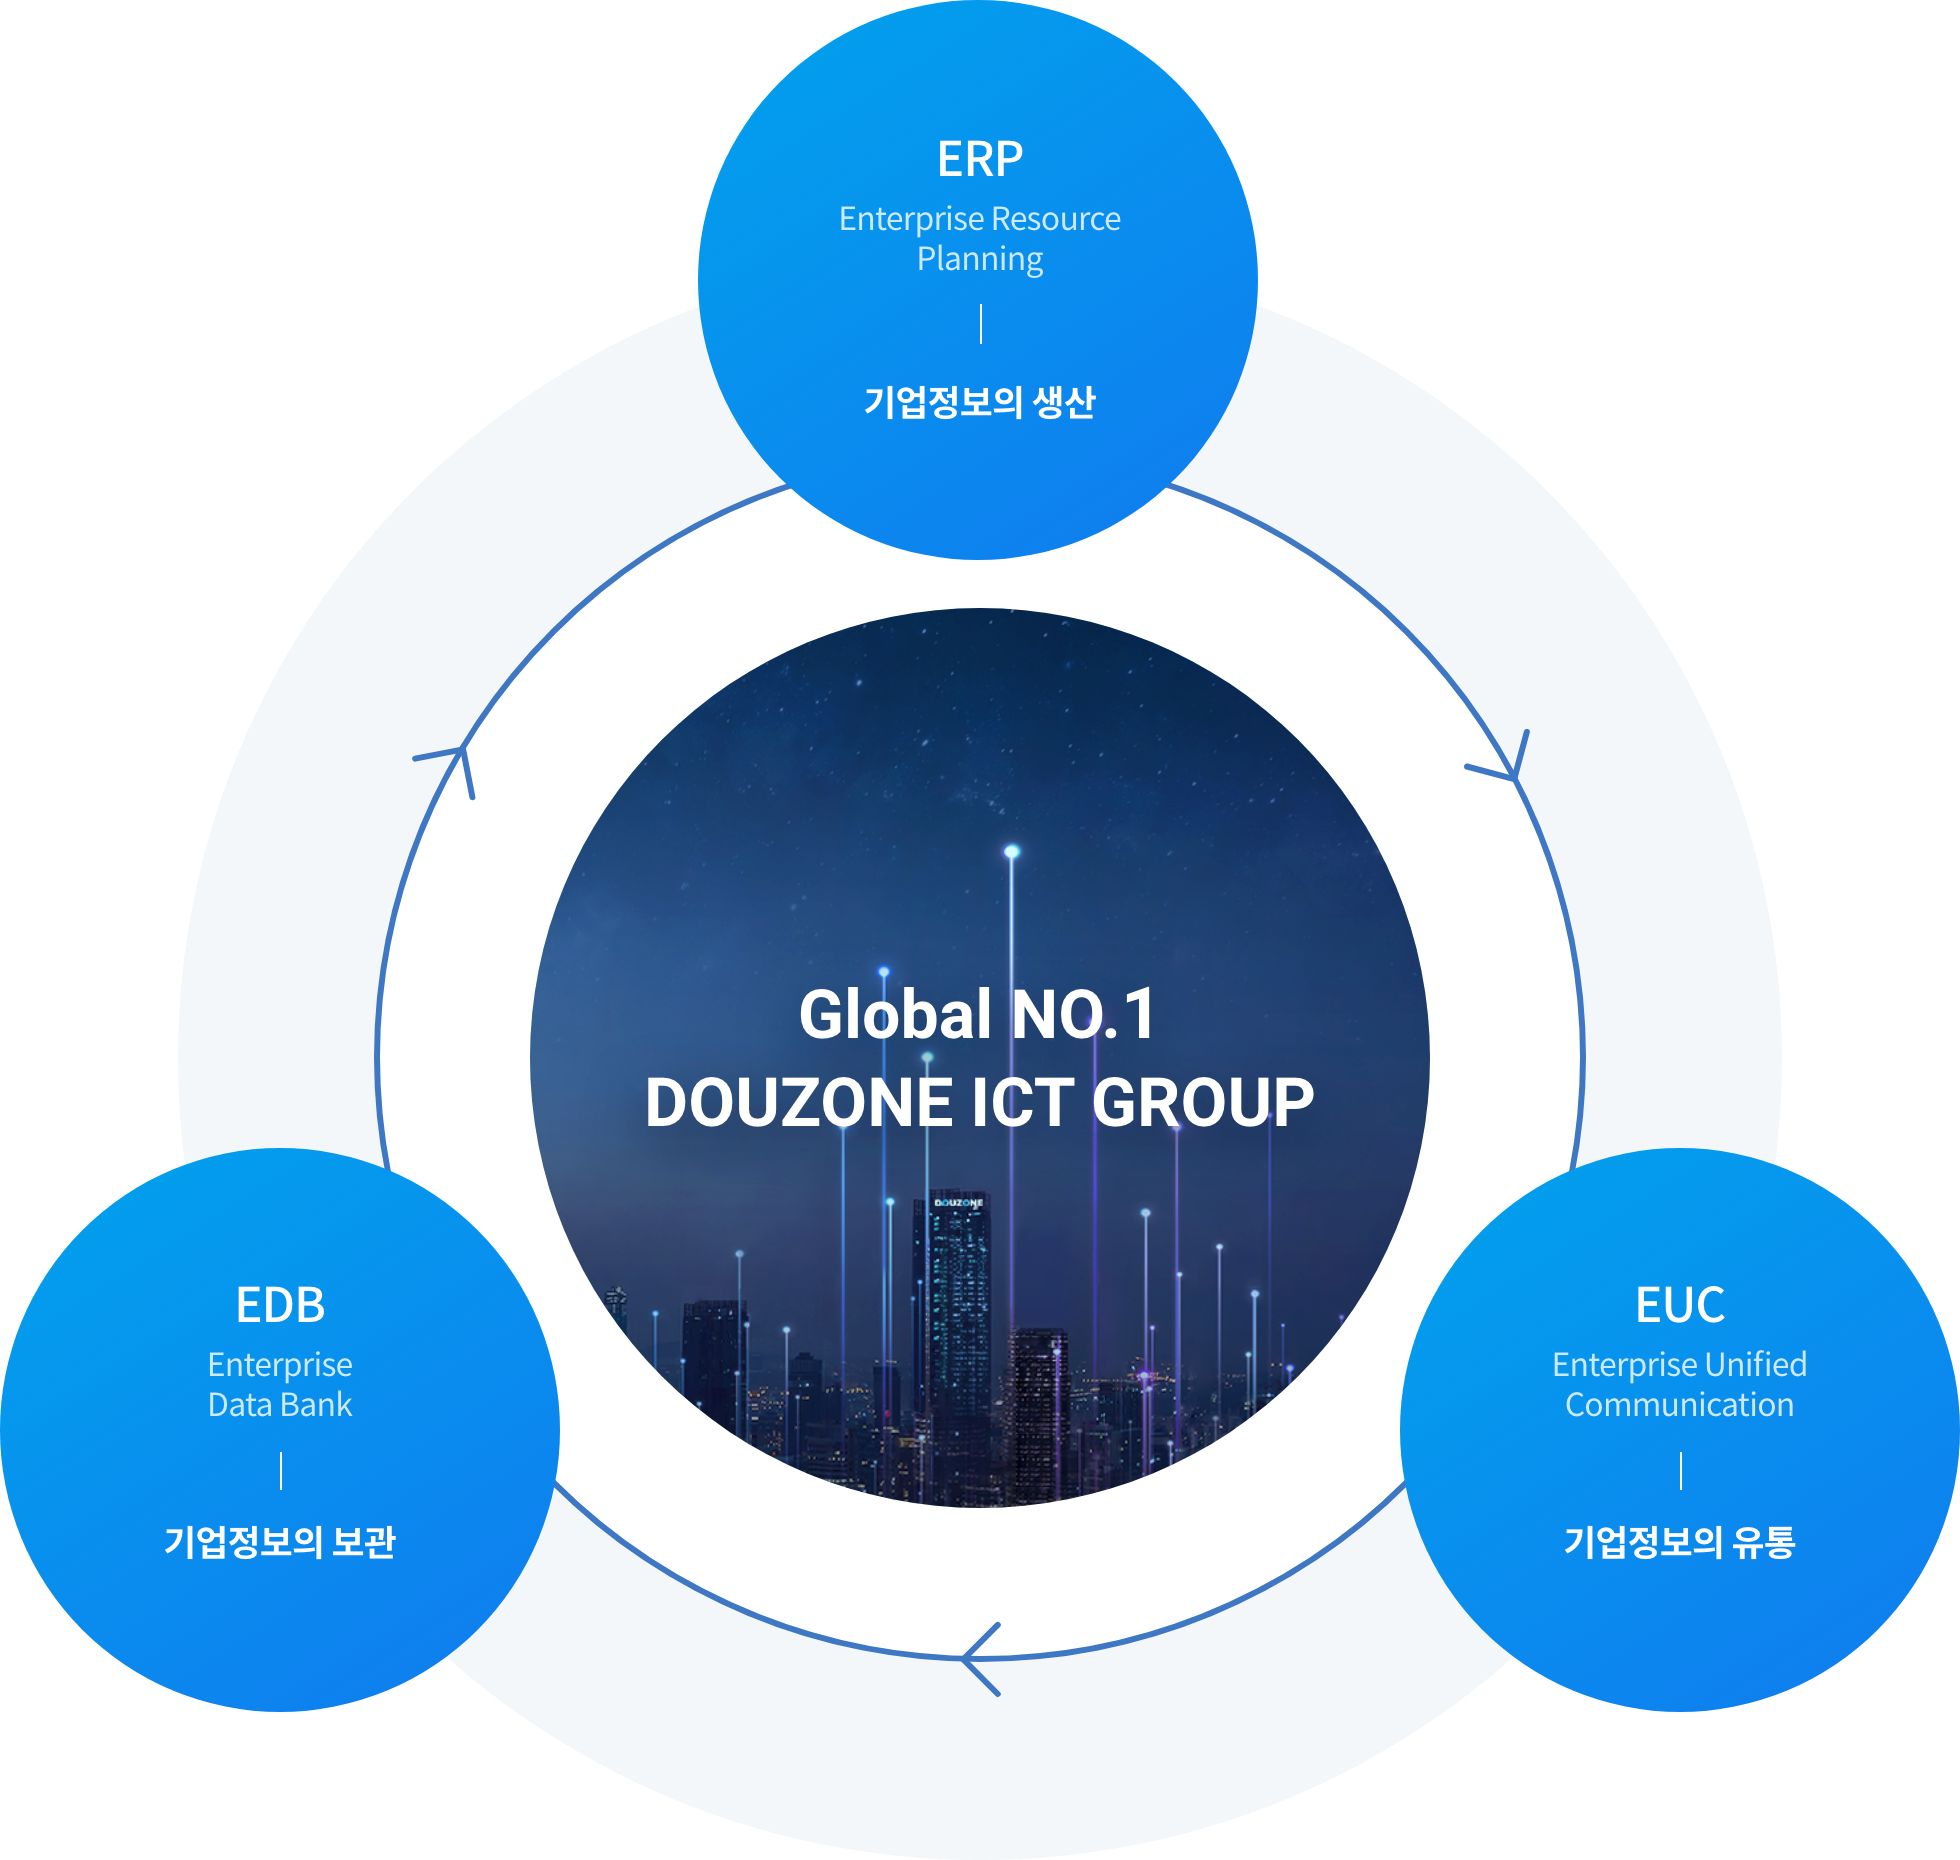 Global No.1 DOUZONE ICT GROUP / ERP Enterprise Resource Planning 기업정보의생산,EUC Enterprise Unified Communication 기업정보의 유통, EDB Enterprise Data Bank 기업정보의 보관 